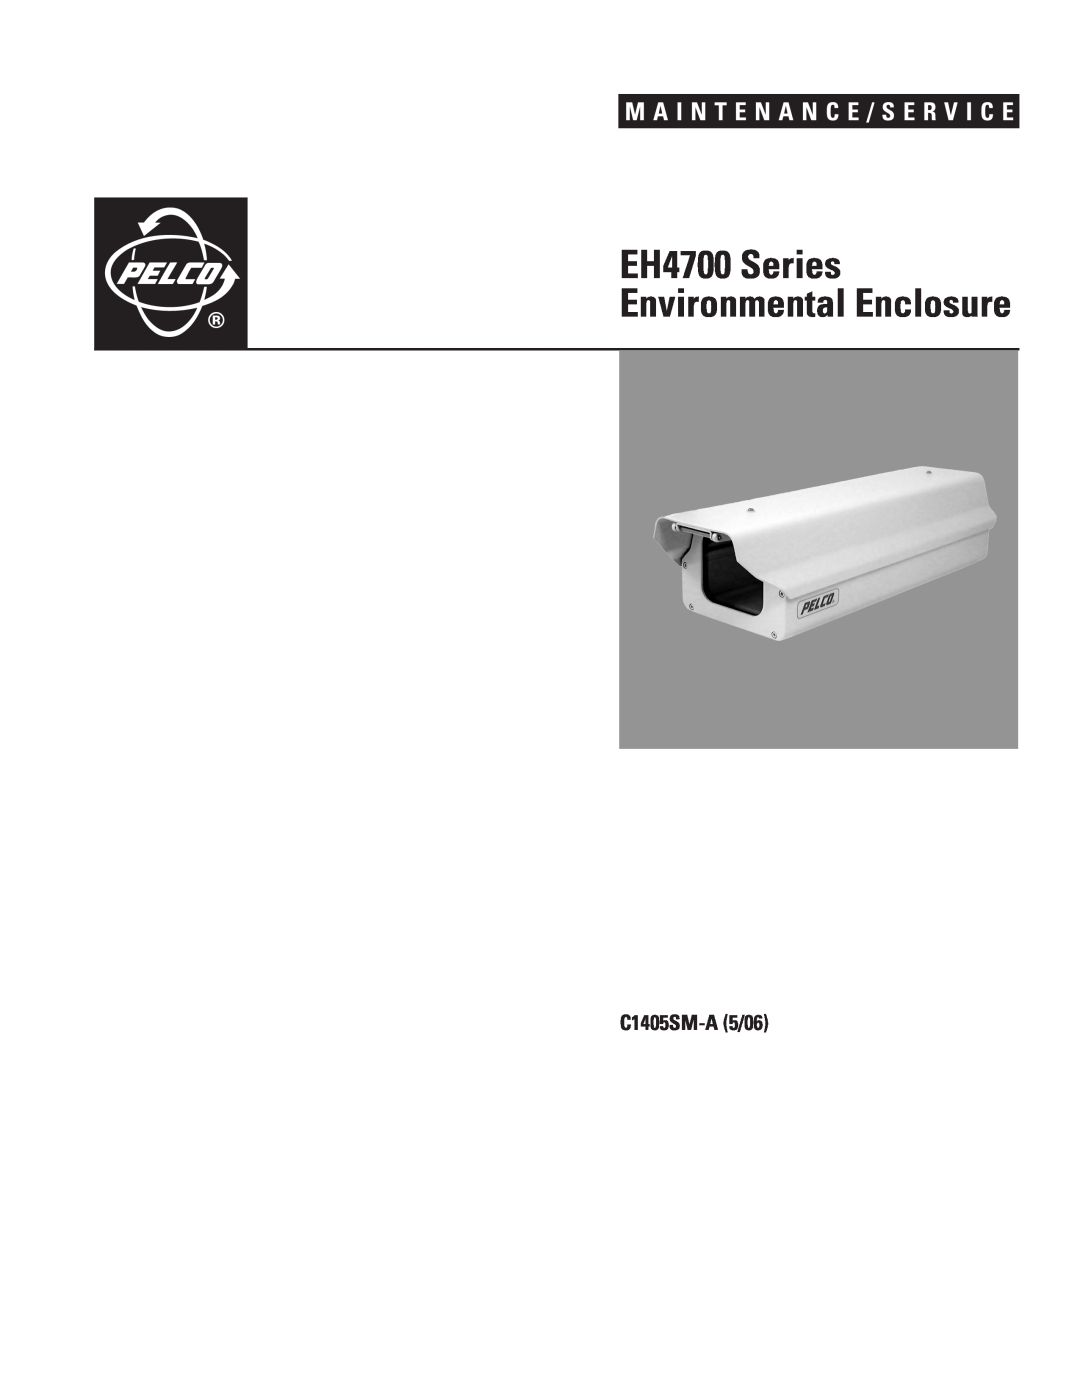 Pelco manual C1405SM-A5/06, EH4700 Series Environmental Enclosure, M A I N T E N A N C E / S E R V I C E 